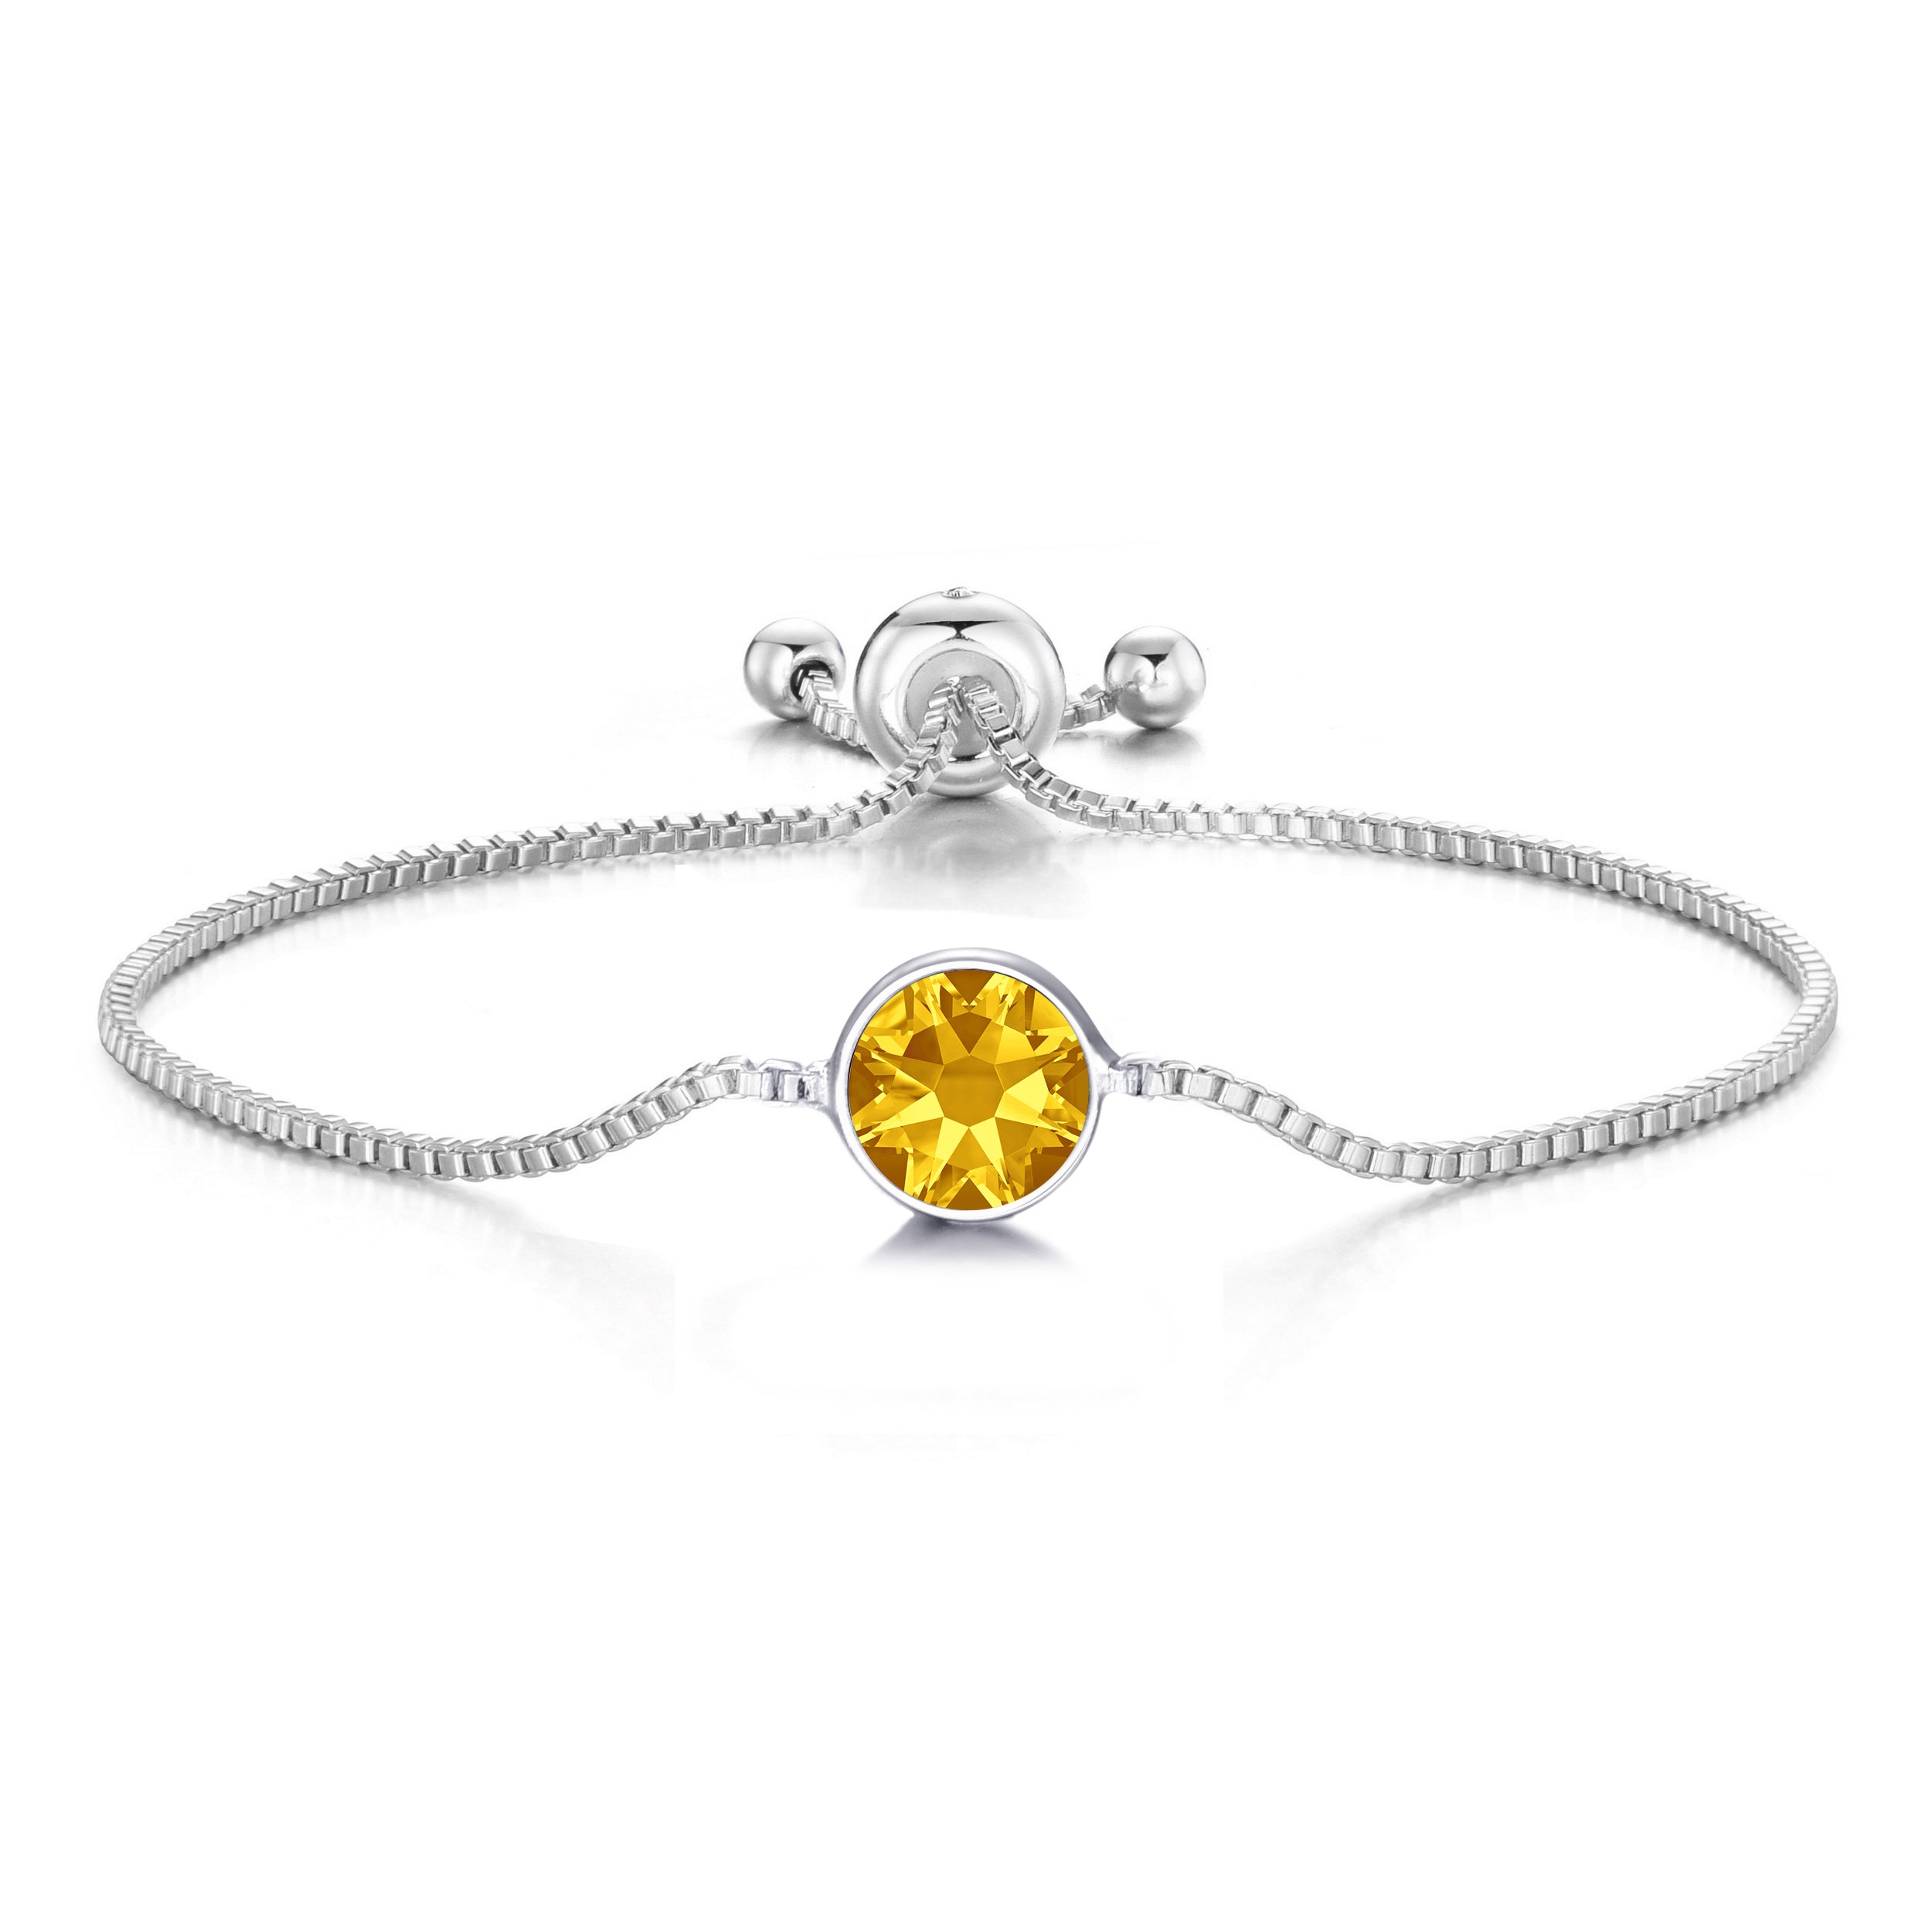 Yellow Crystal Bracelet Created with Zircondia® Crystals by Philip Jones Jewellery